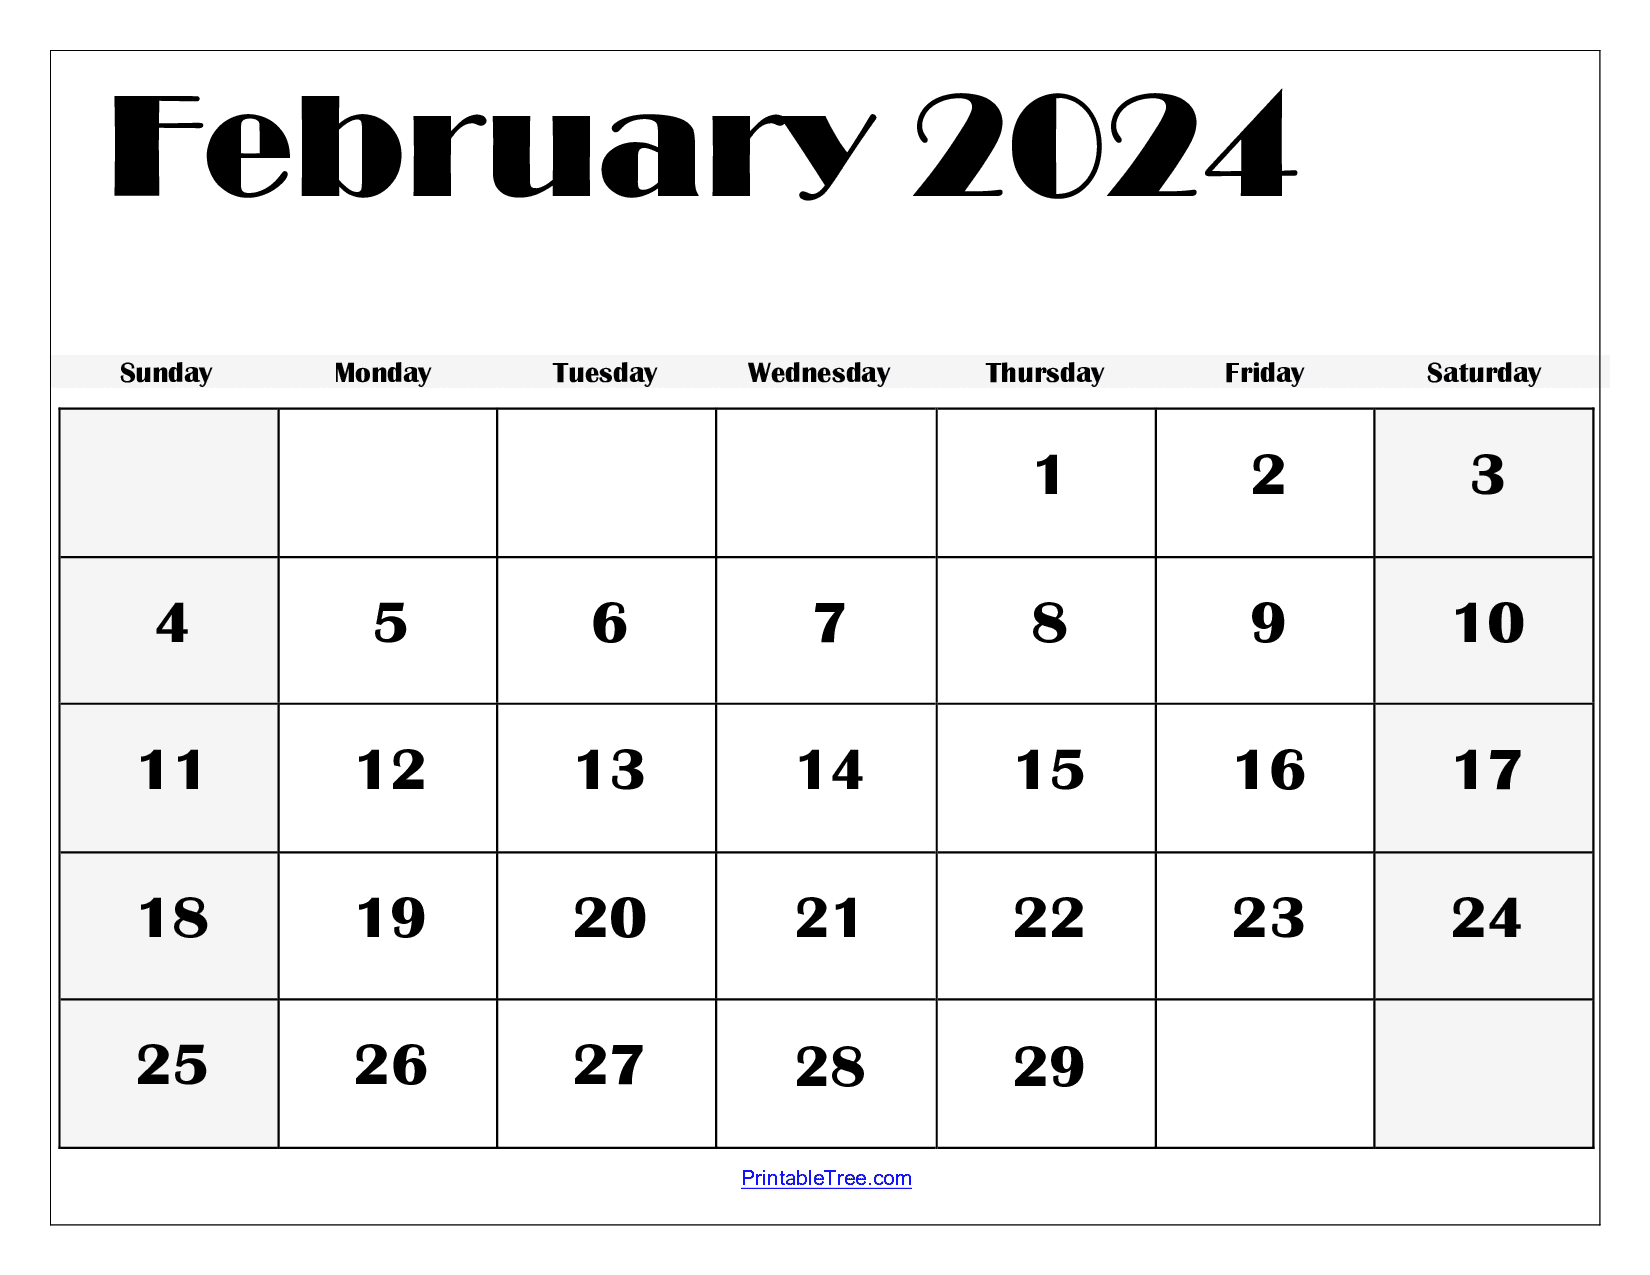 February 2024 Calendar Printable Pdf Template With Holidays for February 2024 Calendar Printable With Notes